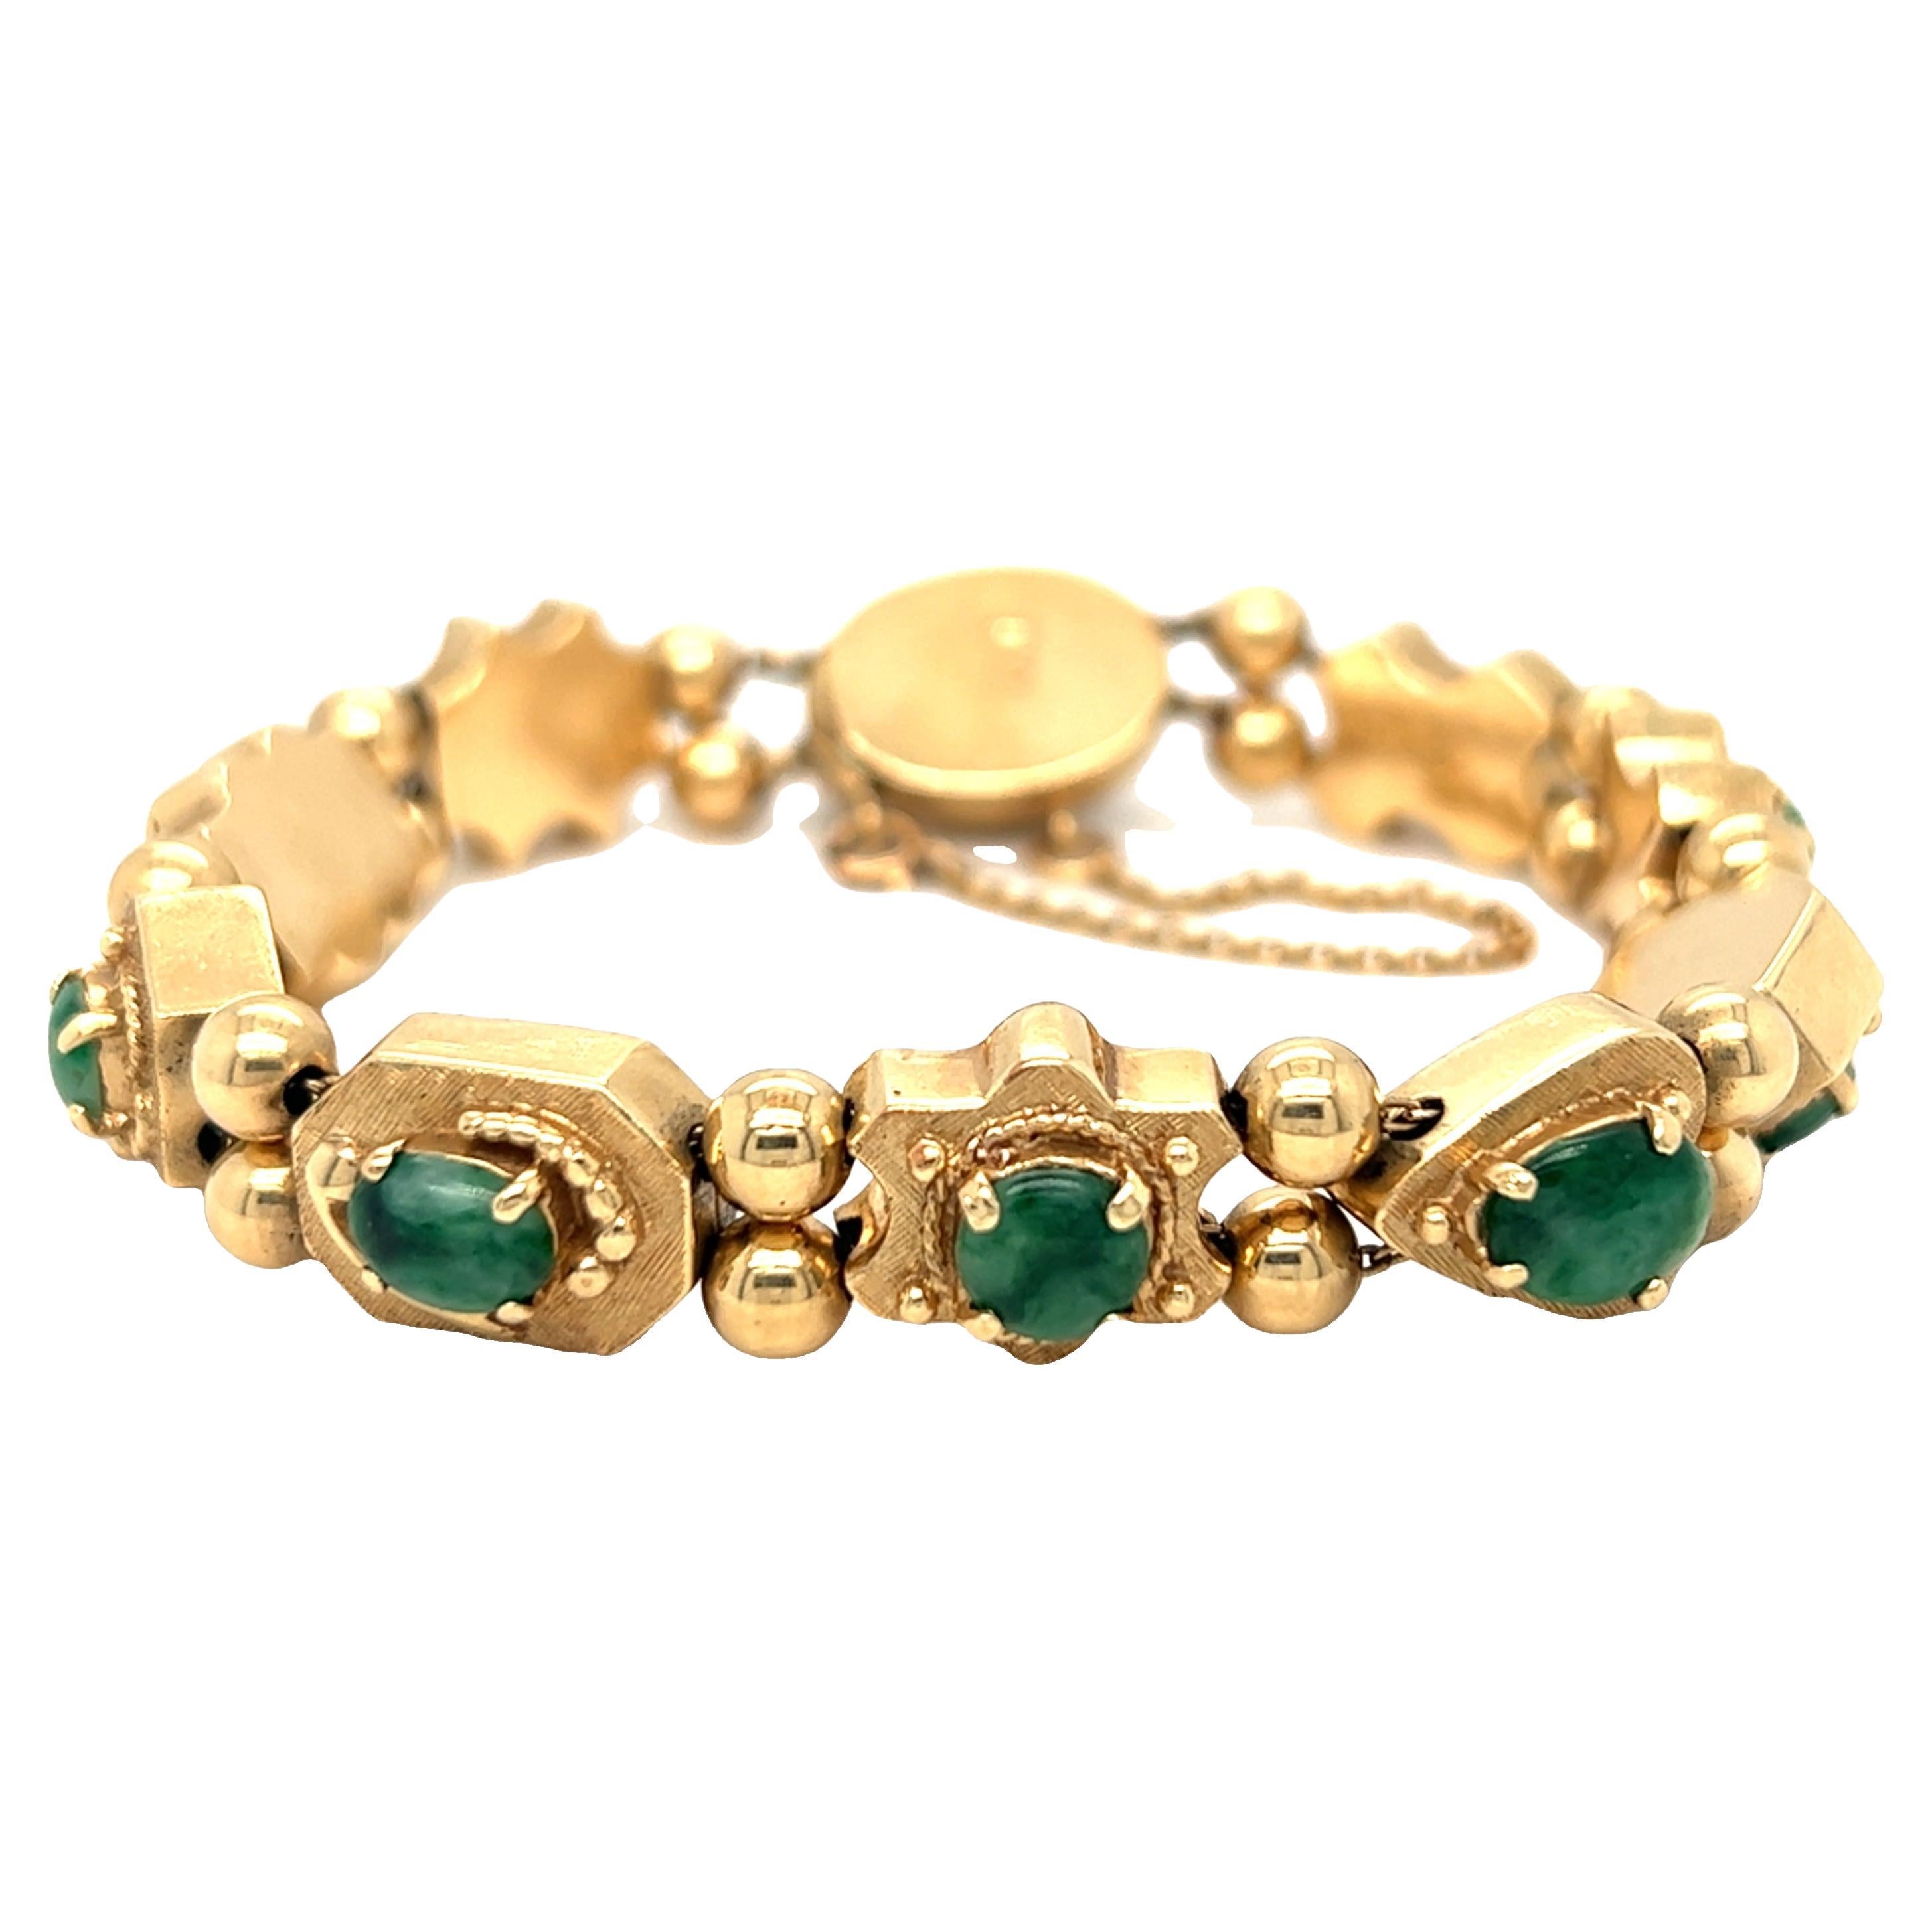 Vintage Nephrite Jade Bracelet 14K Yellow Gold